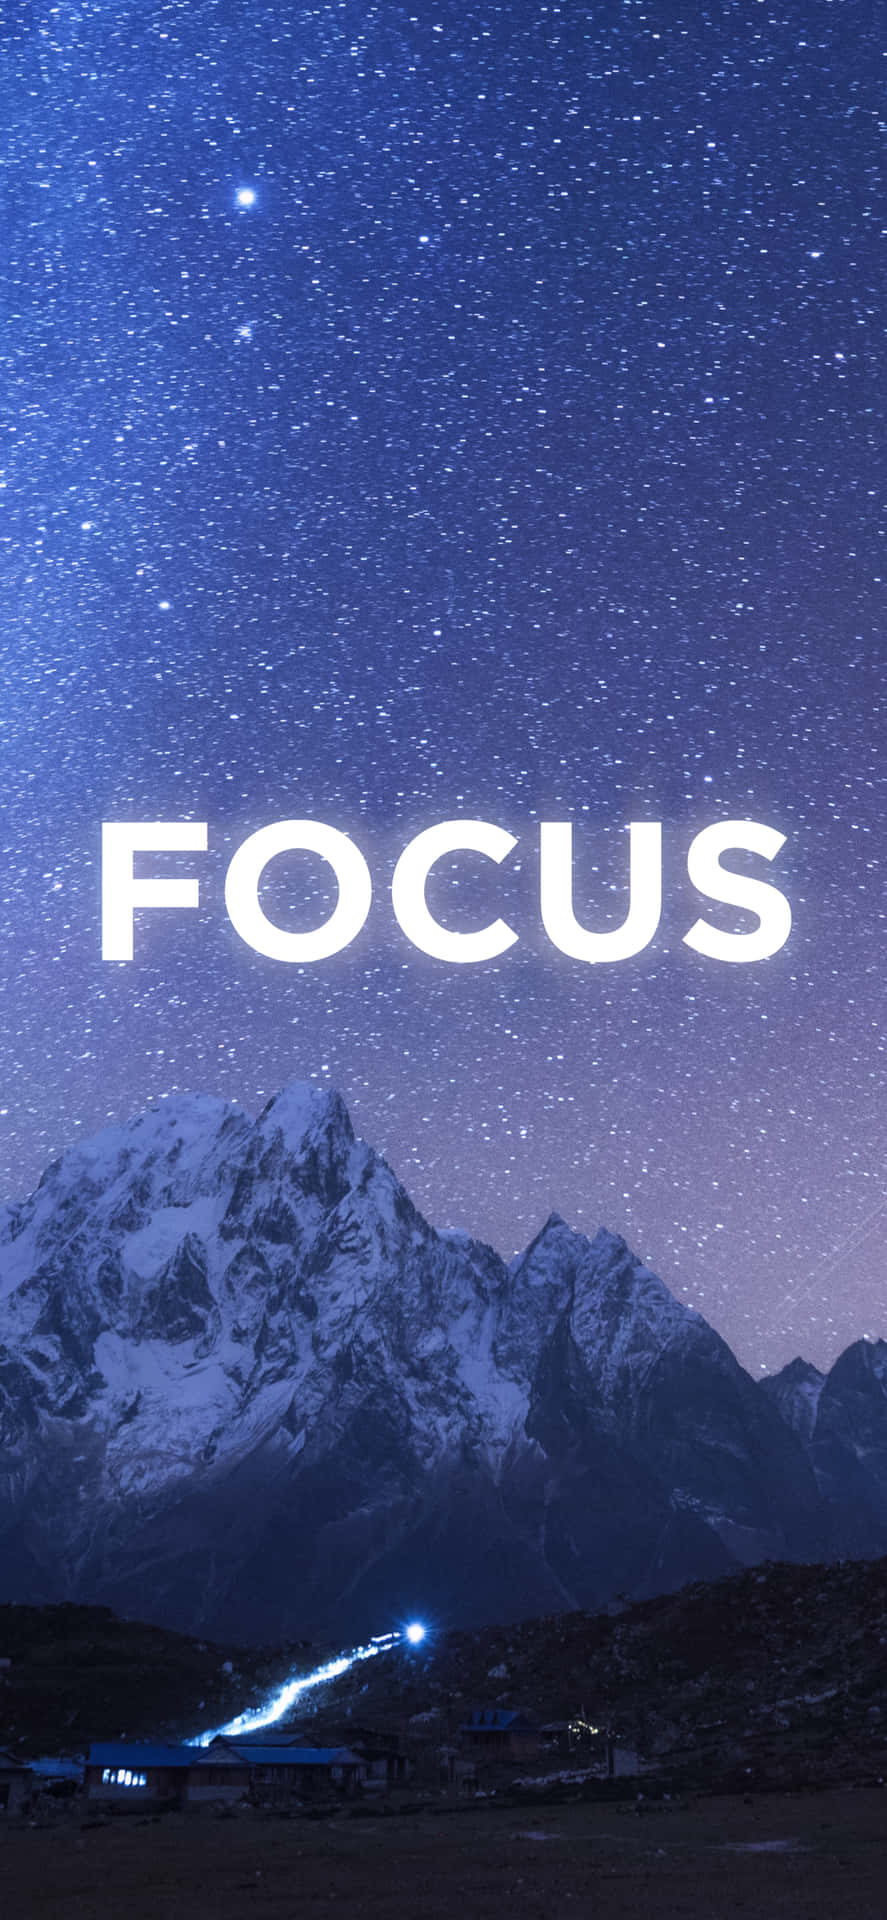 focus word wallpaper